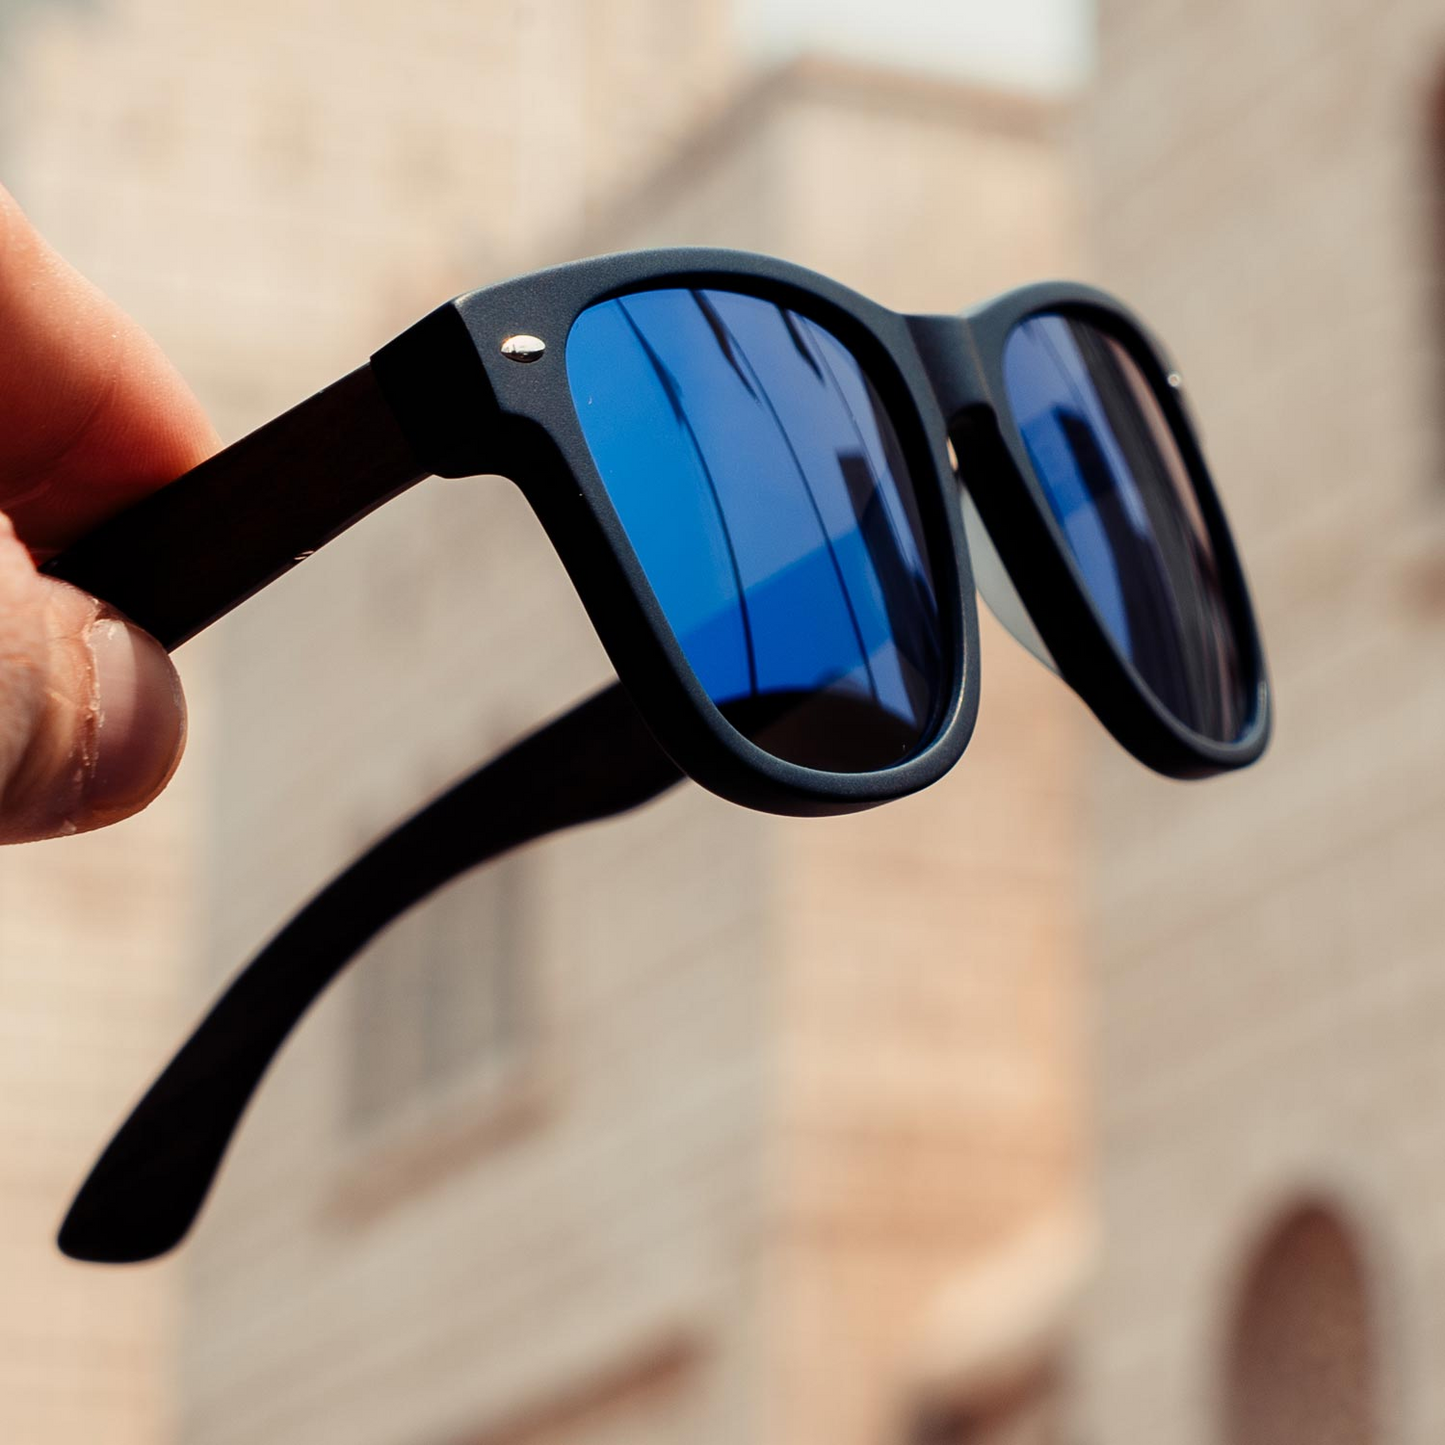 Ebony wood classic style sunglasses with blue mirrored polarized lenses